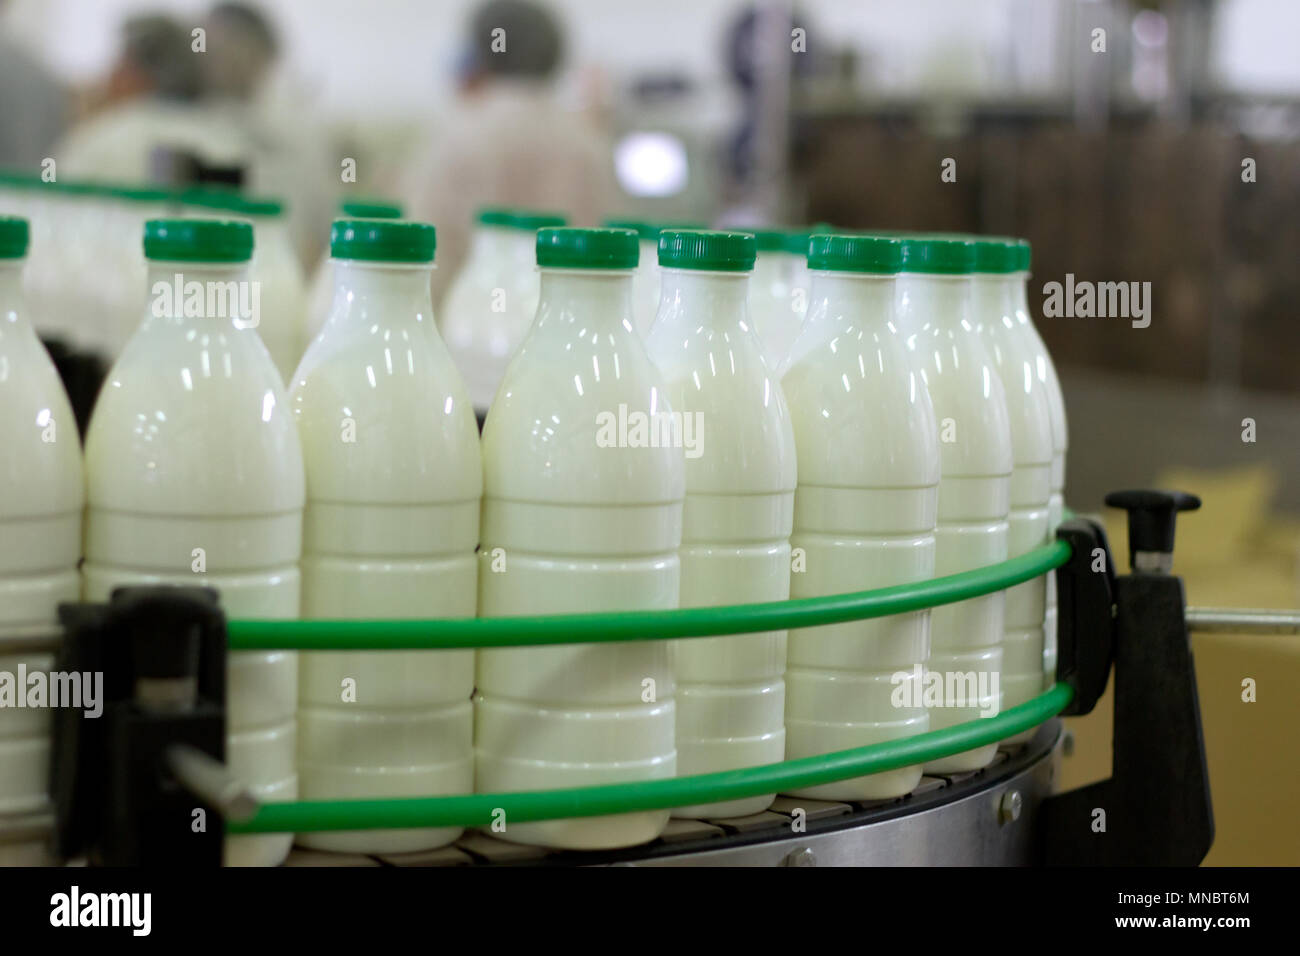 Planta de lácteos. Transportador con botellas de leche. Foto de stock